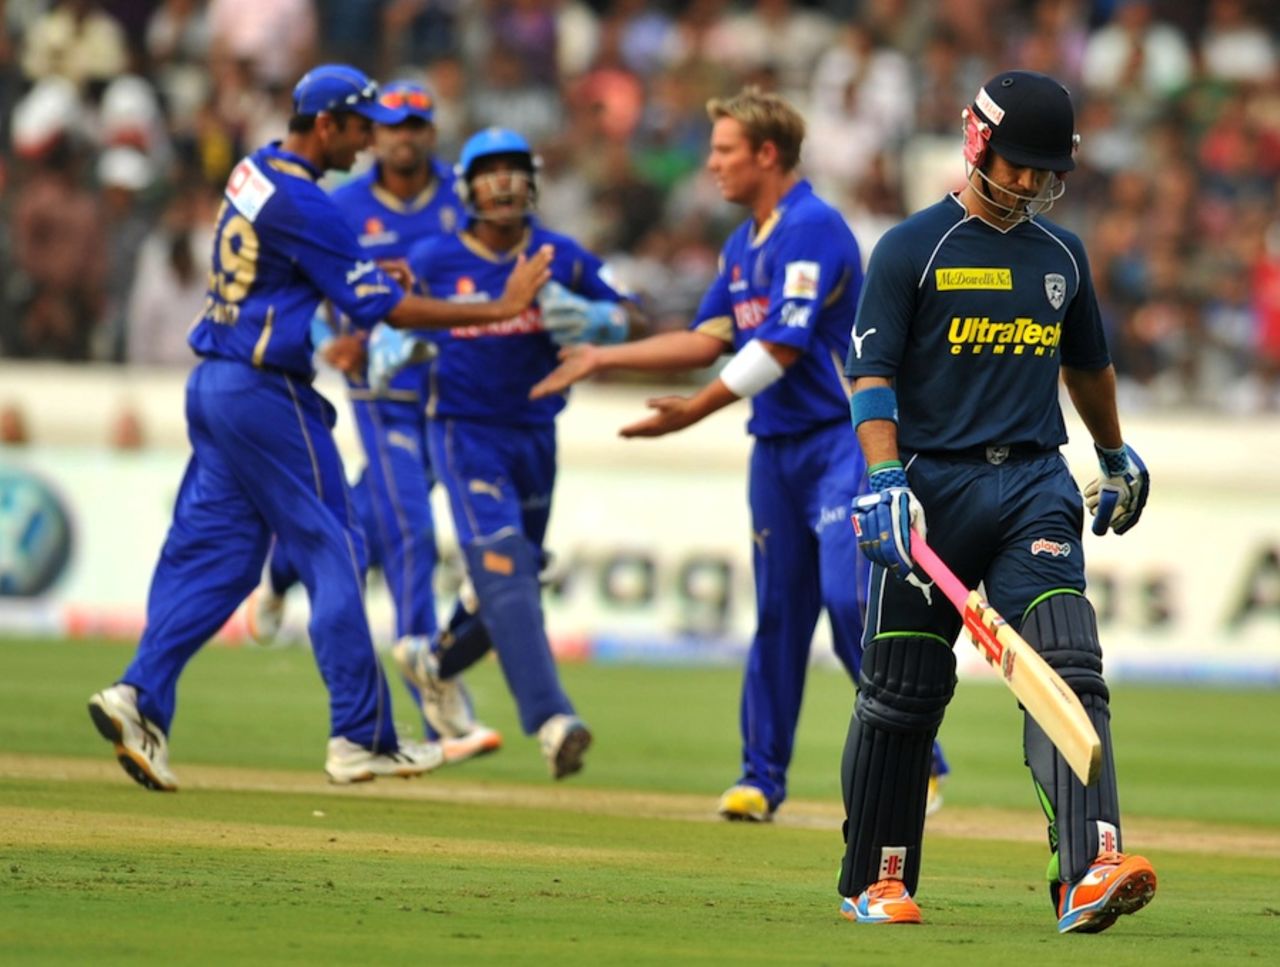 JP Duminy was dismissed by Shane Warne, Deccan Chargers v Rajasthan Royals, IPL 2011, Hyderabad, April 9, 2011